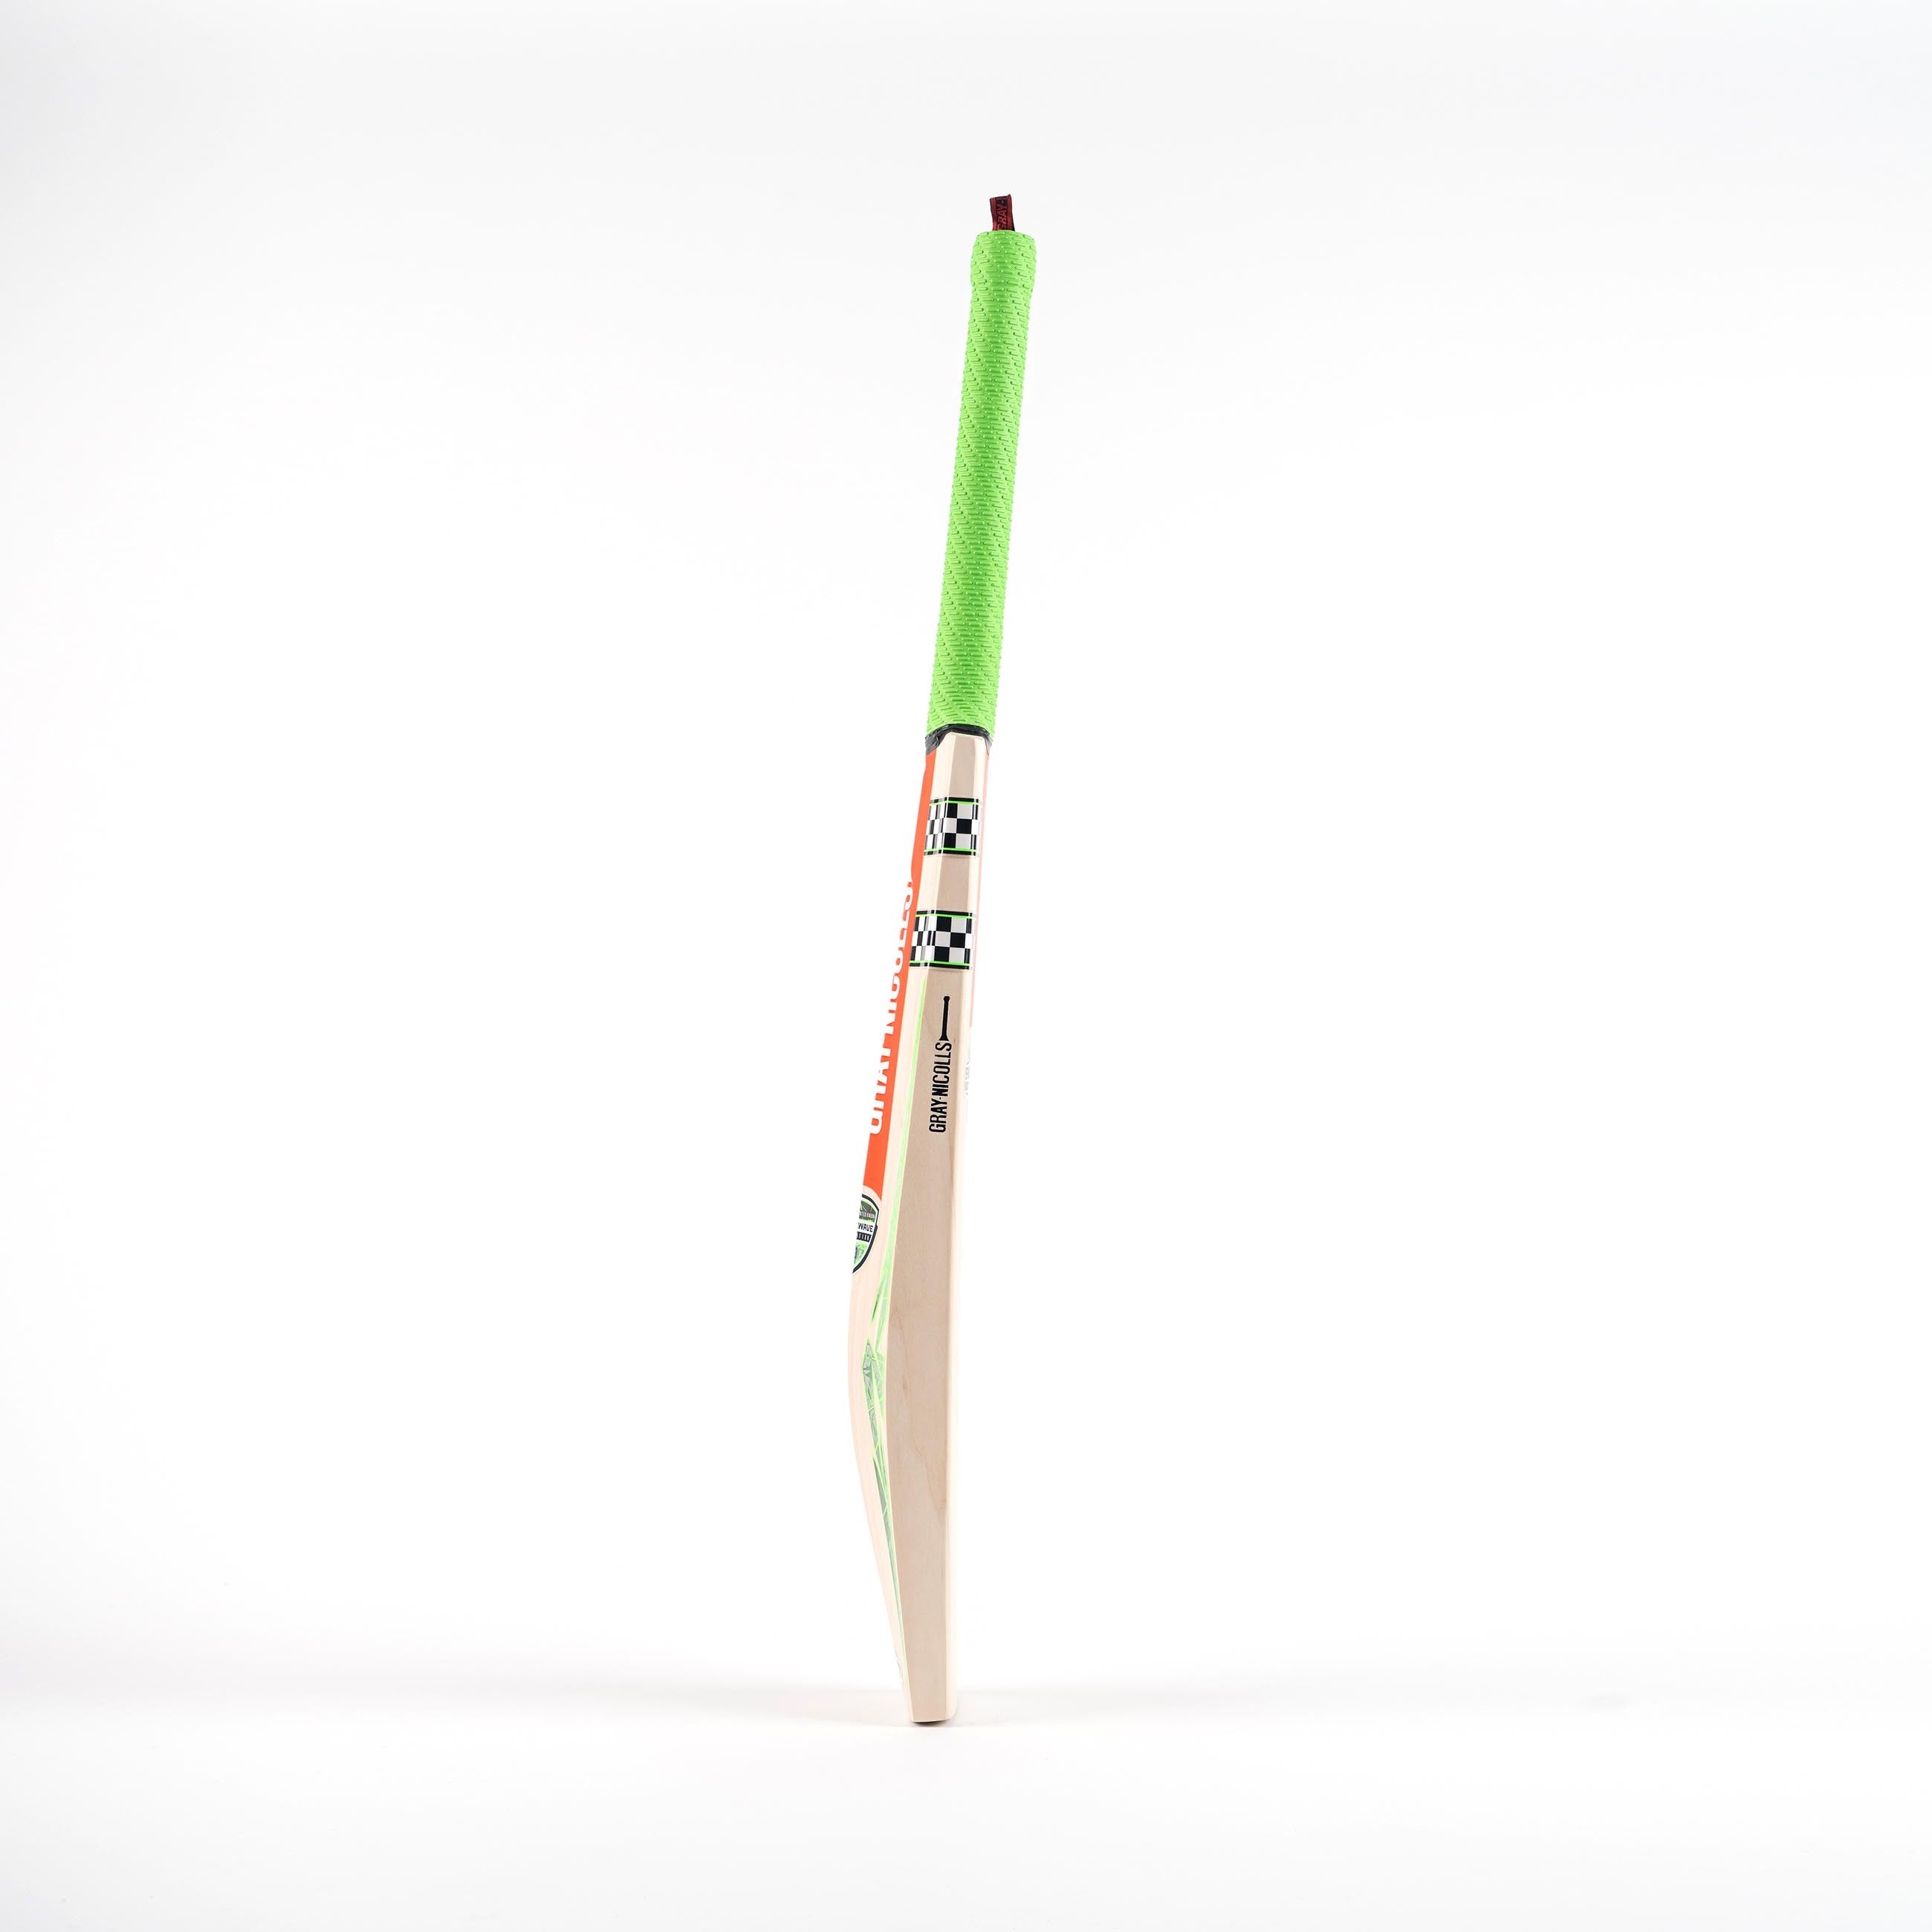 Shockwave 2.3 150 Junior Cricket Bat